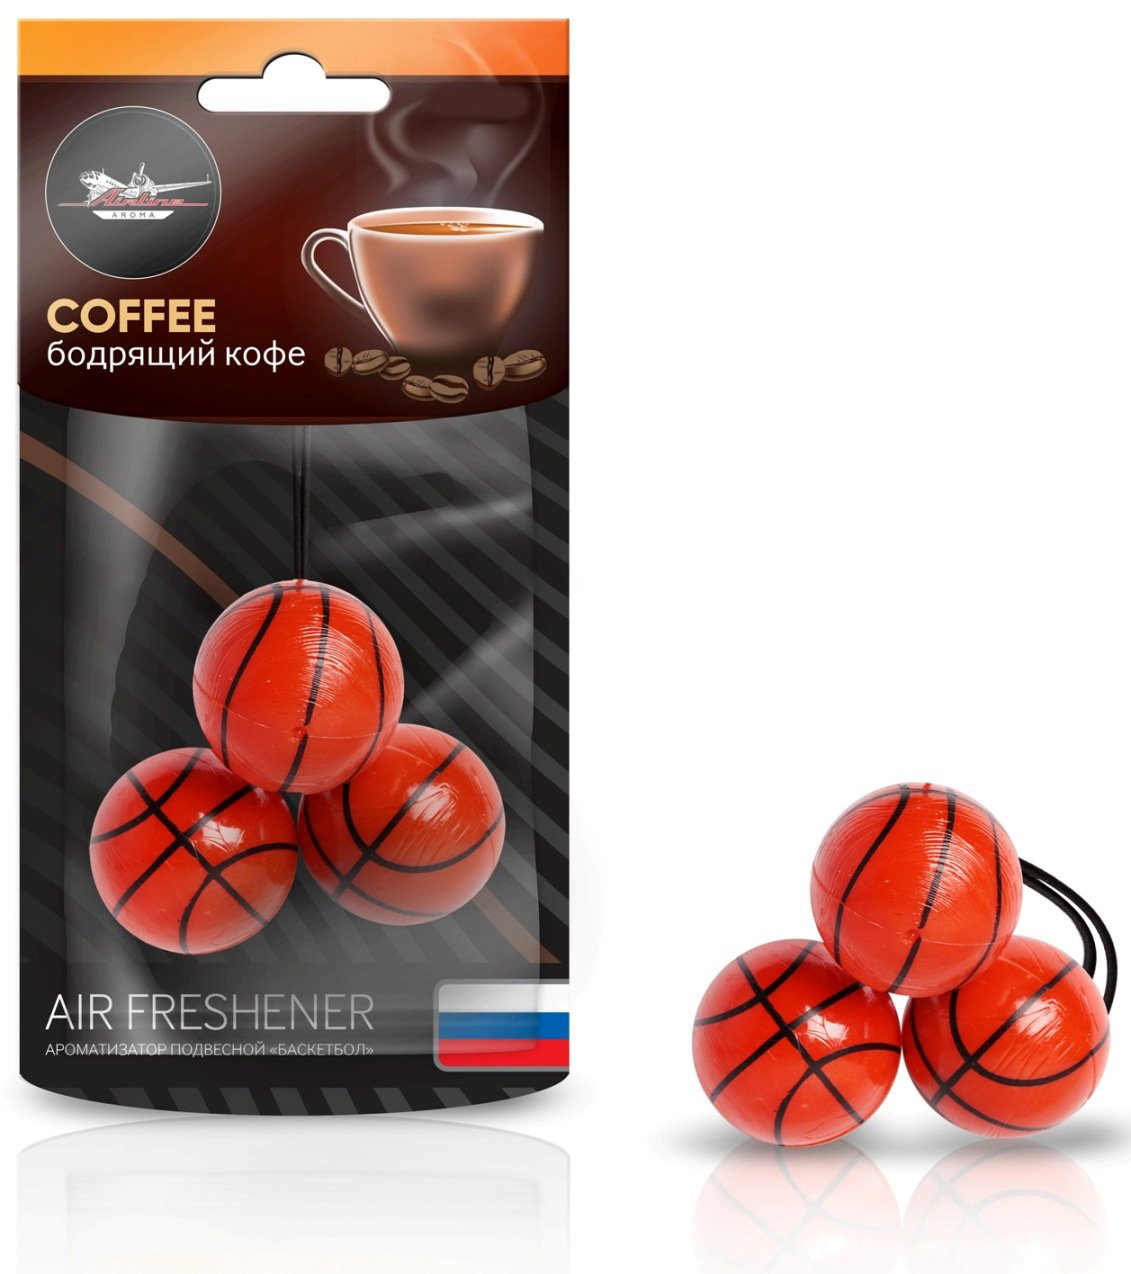 Ароматизатор подвесной Баскетбол бодрящий кофе  132